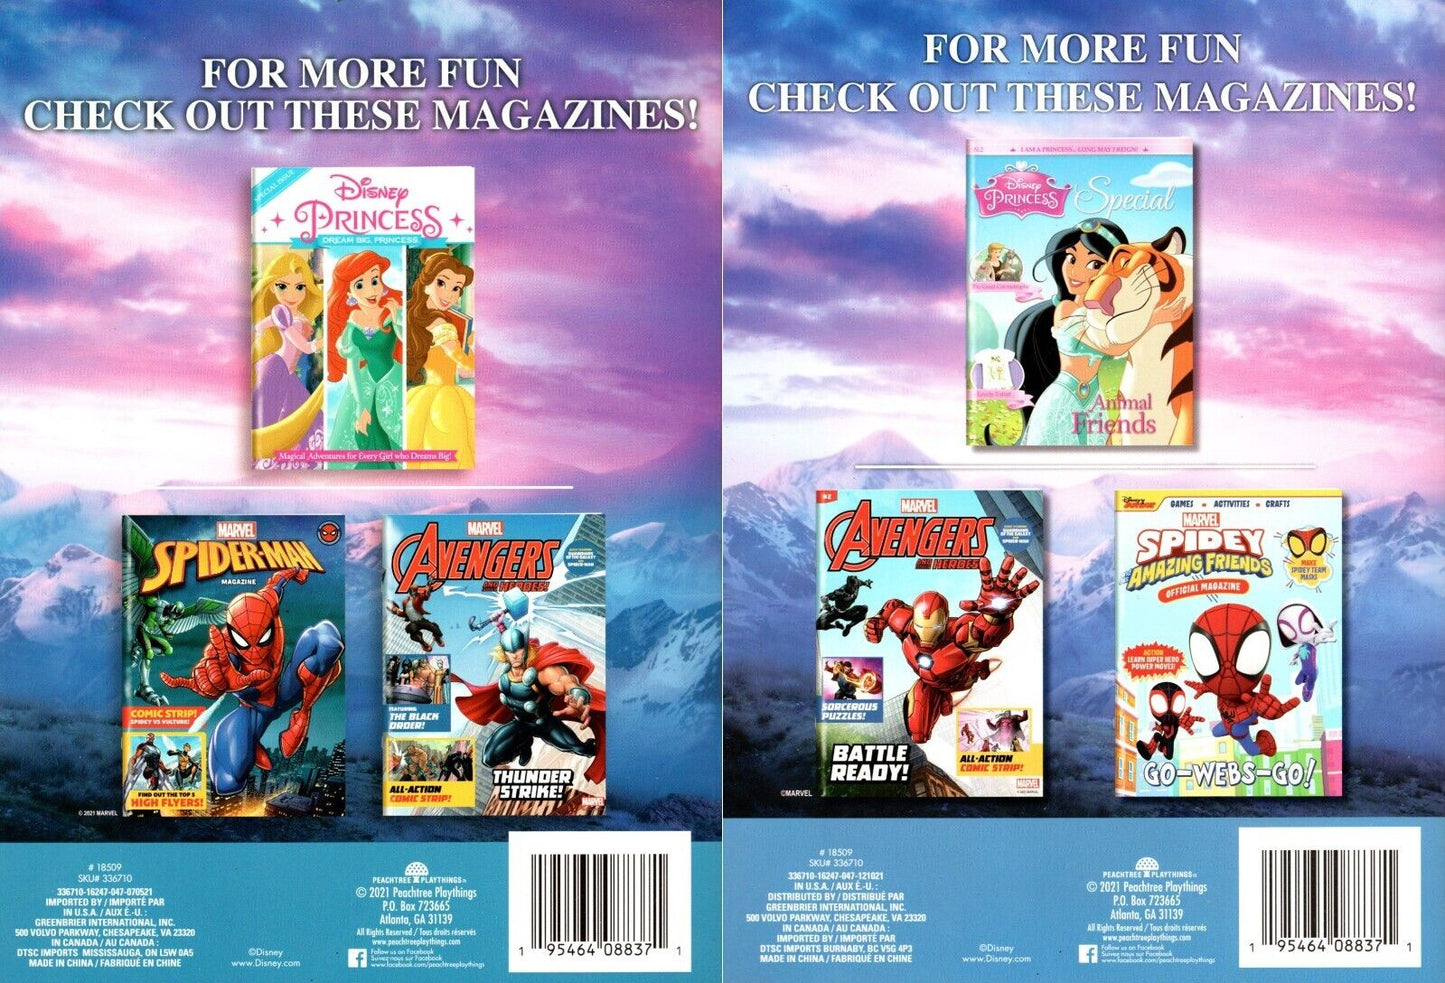 Disney Frozen - The Official Magazine - Coloring & Activity Book vol.1-2